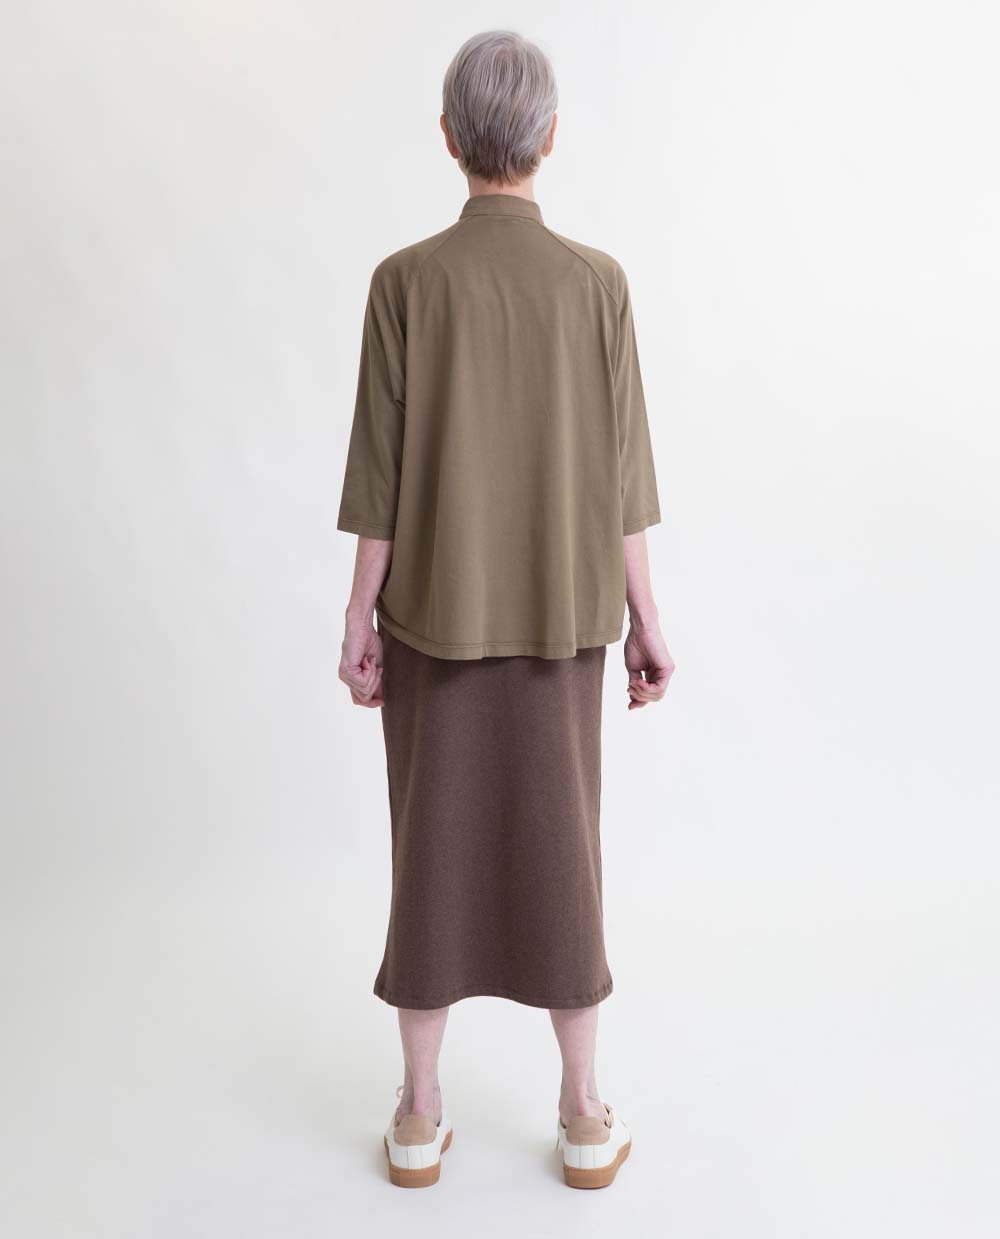 Ana Organic Cotton Skirt In Brown Marl